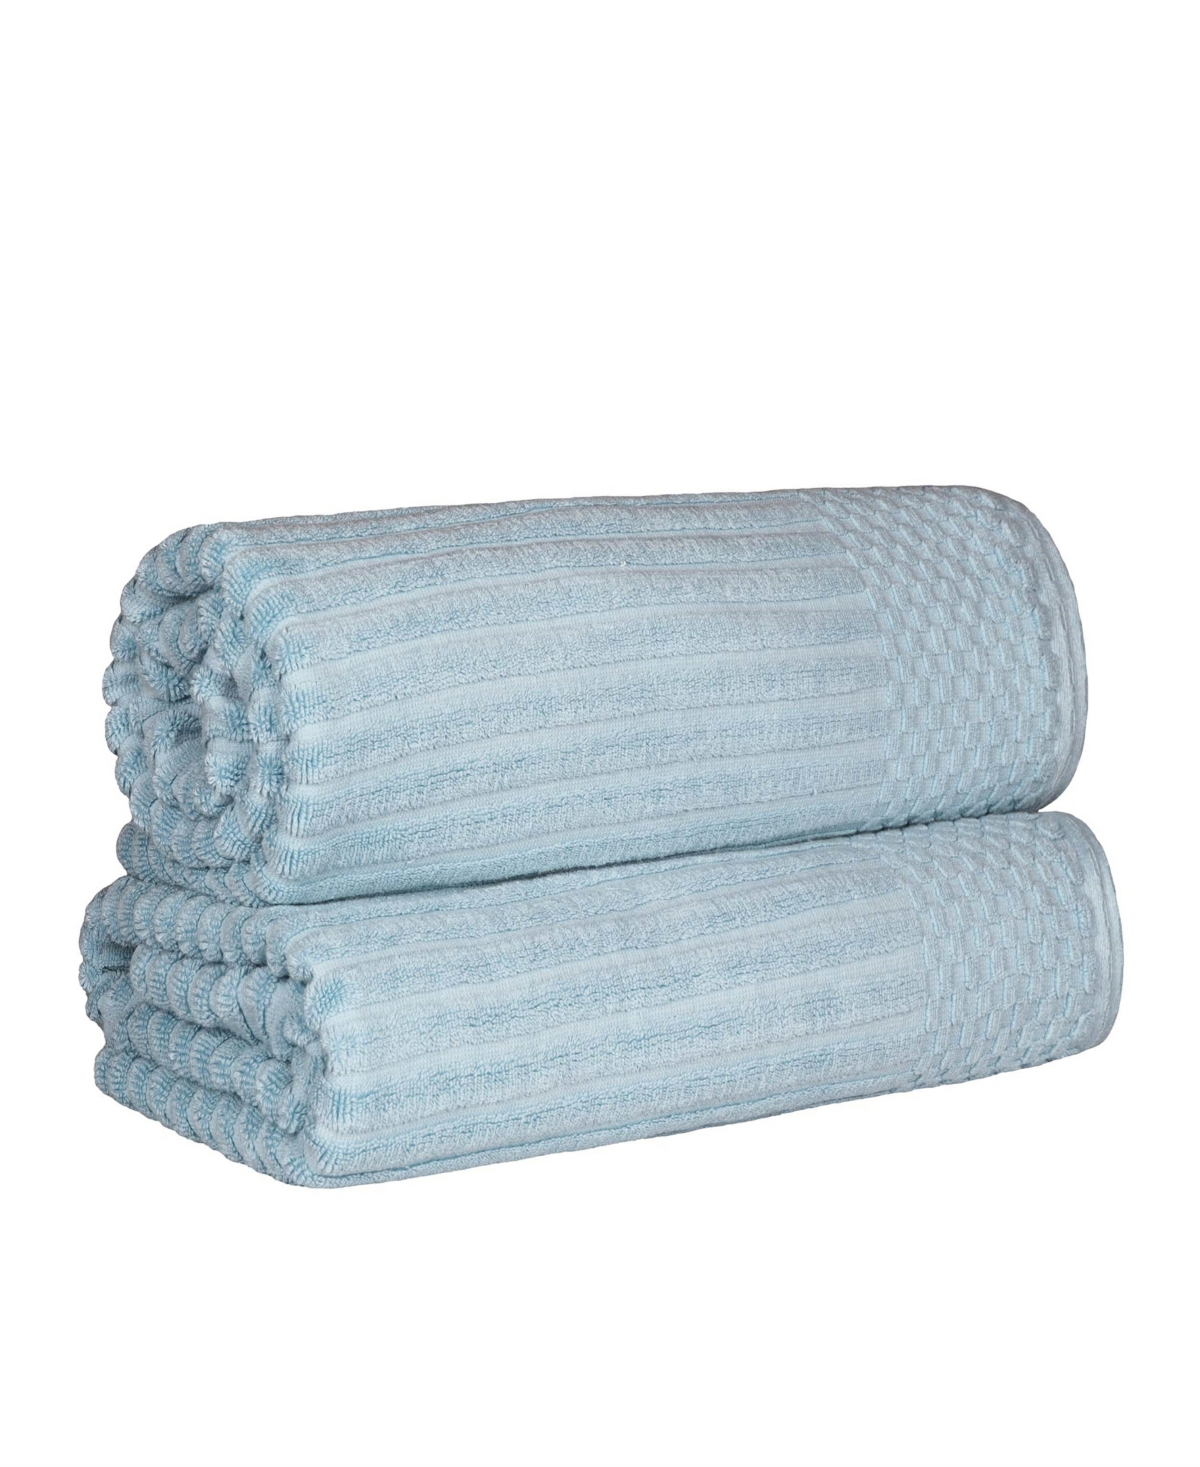 Superior Soho Checkered Border Cotton 2 Piece Bath Sheet Set, 68" X 34" In Slate Blue